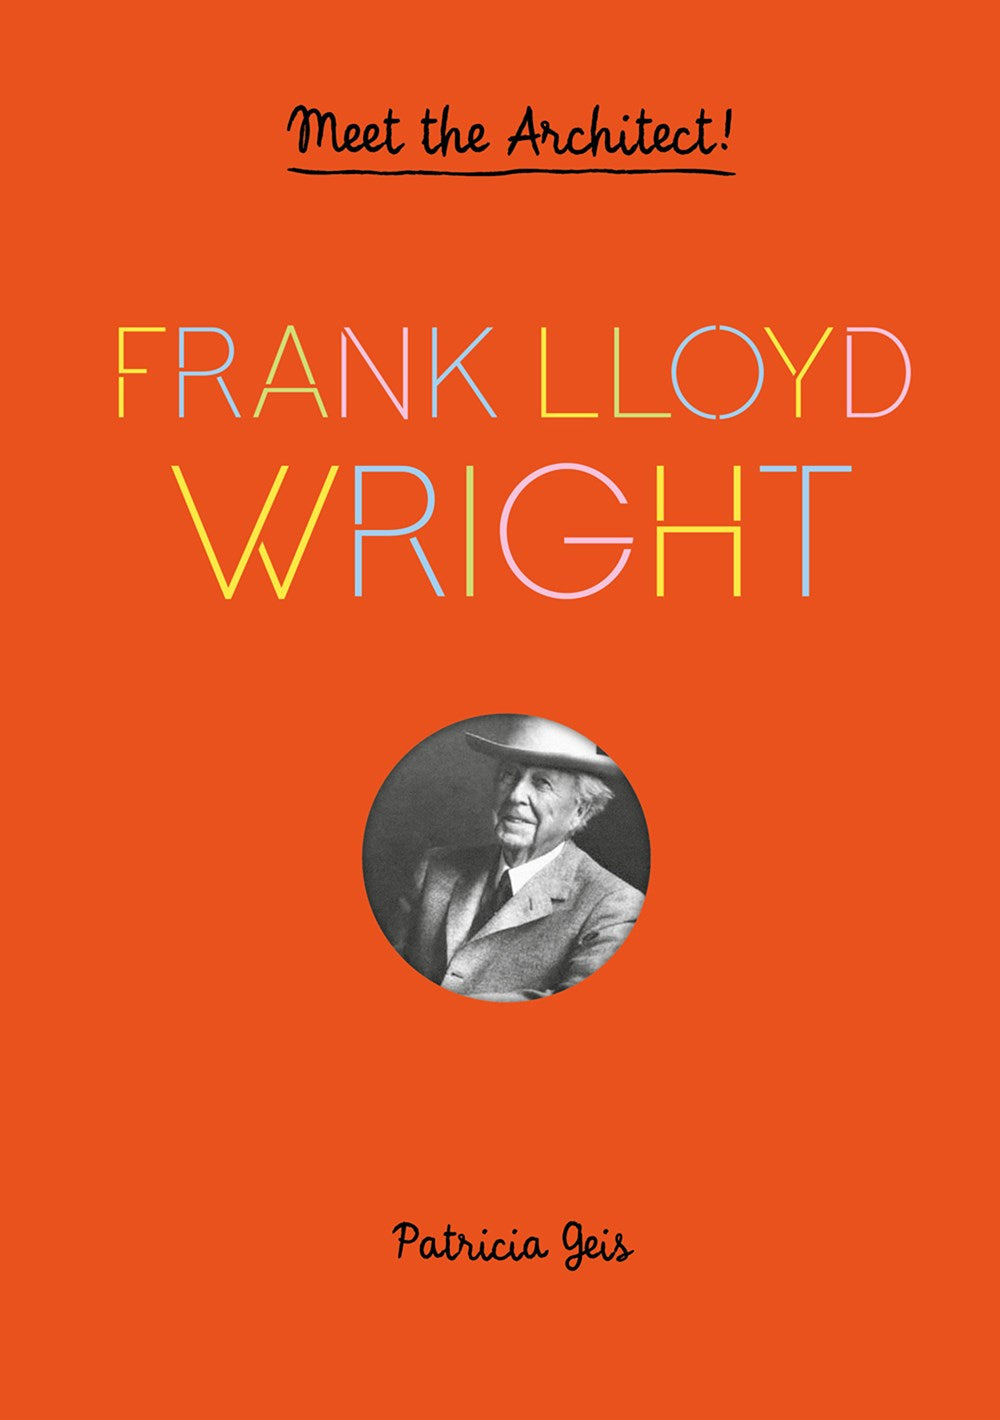 Frank Lloyd Wright: Libro desplegable Conoce al arquitecto